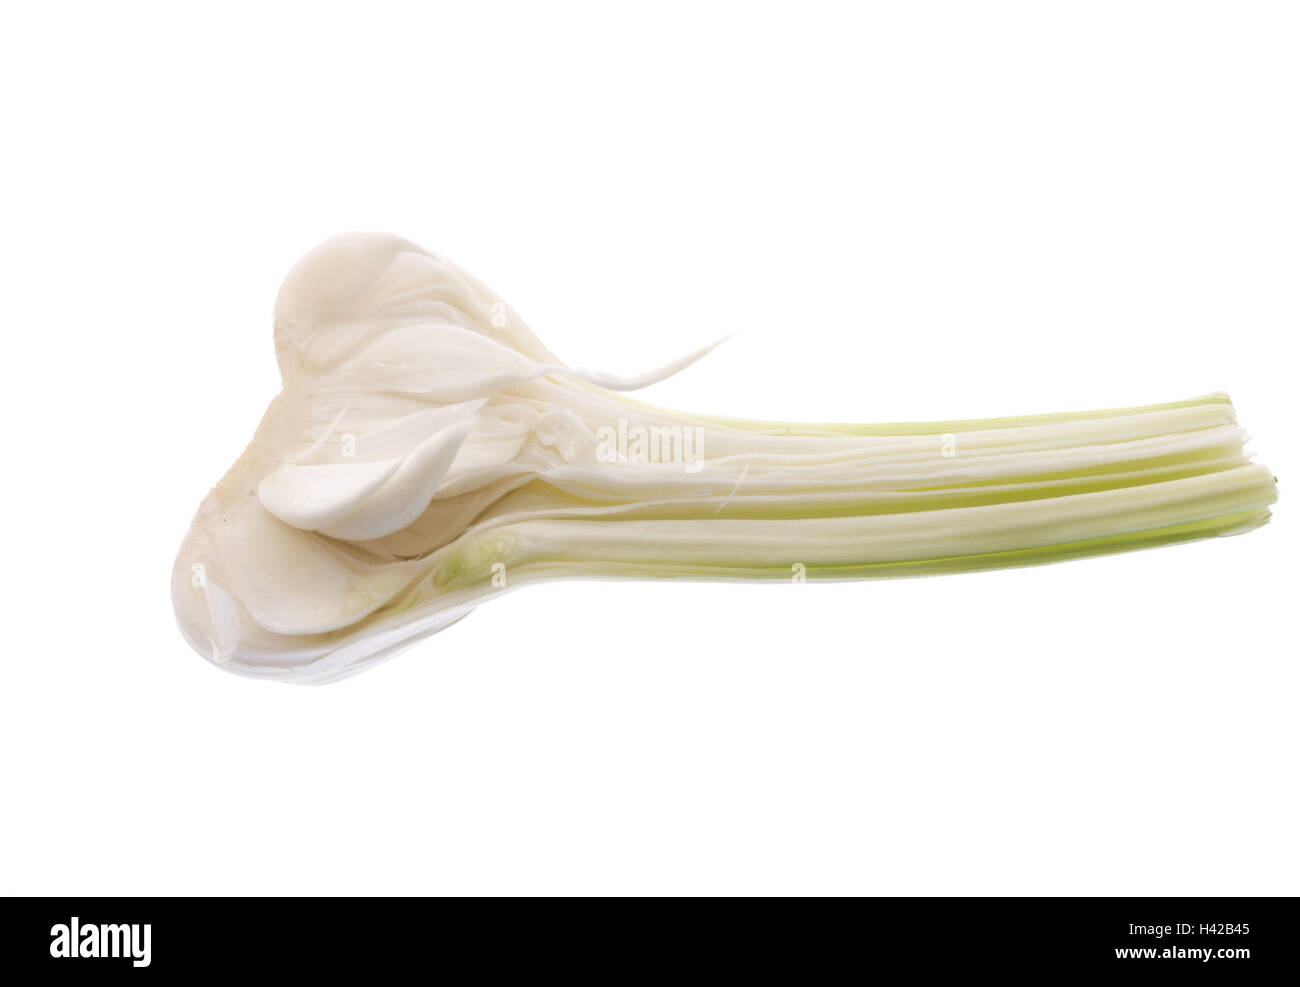 Garlic nodule, halves, Stock Photo